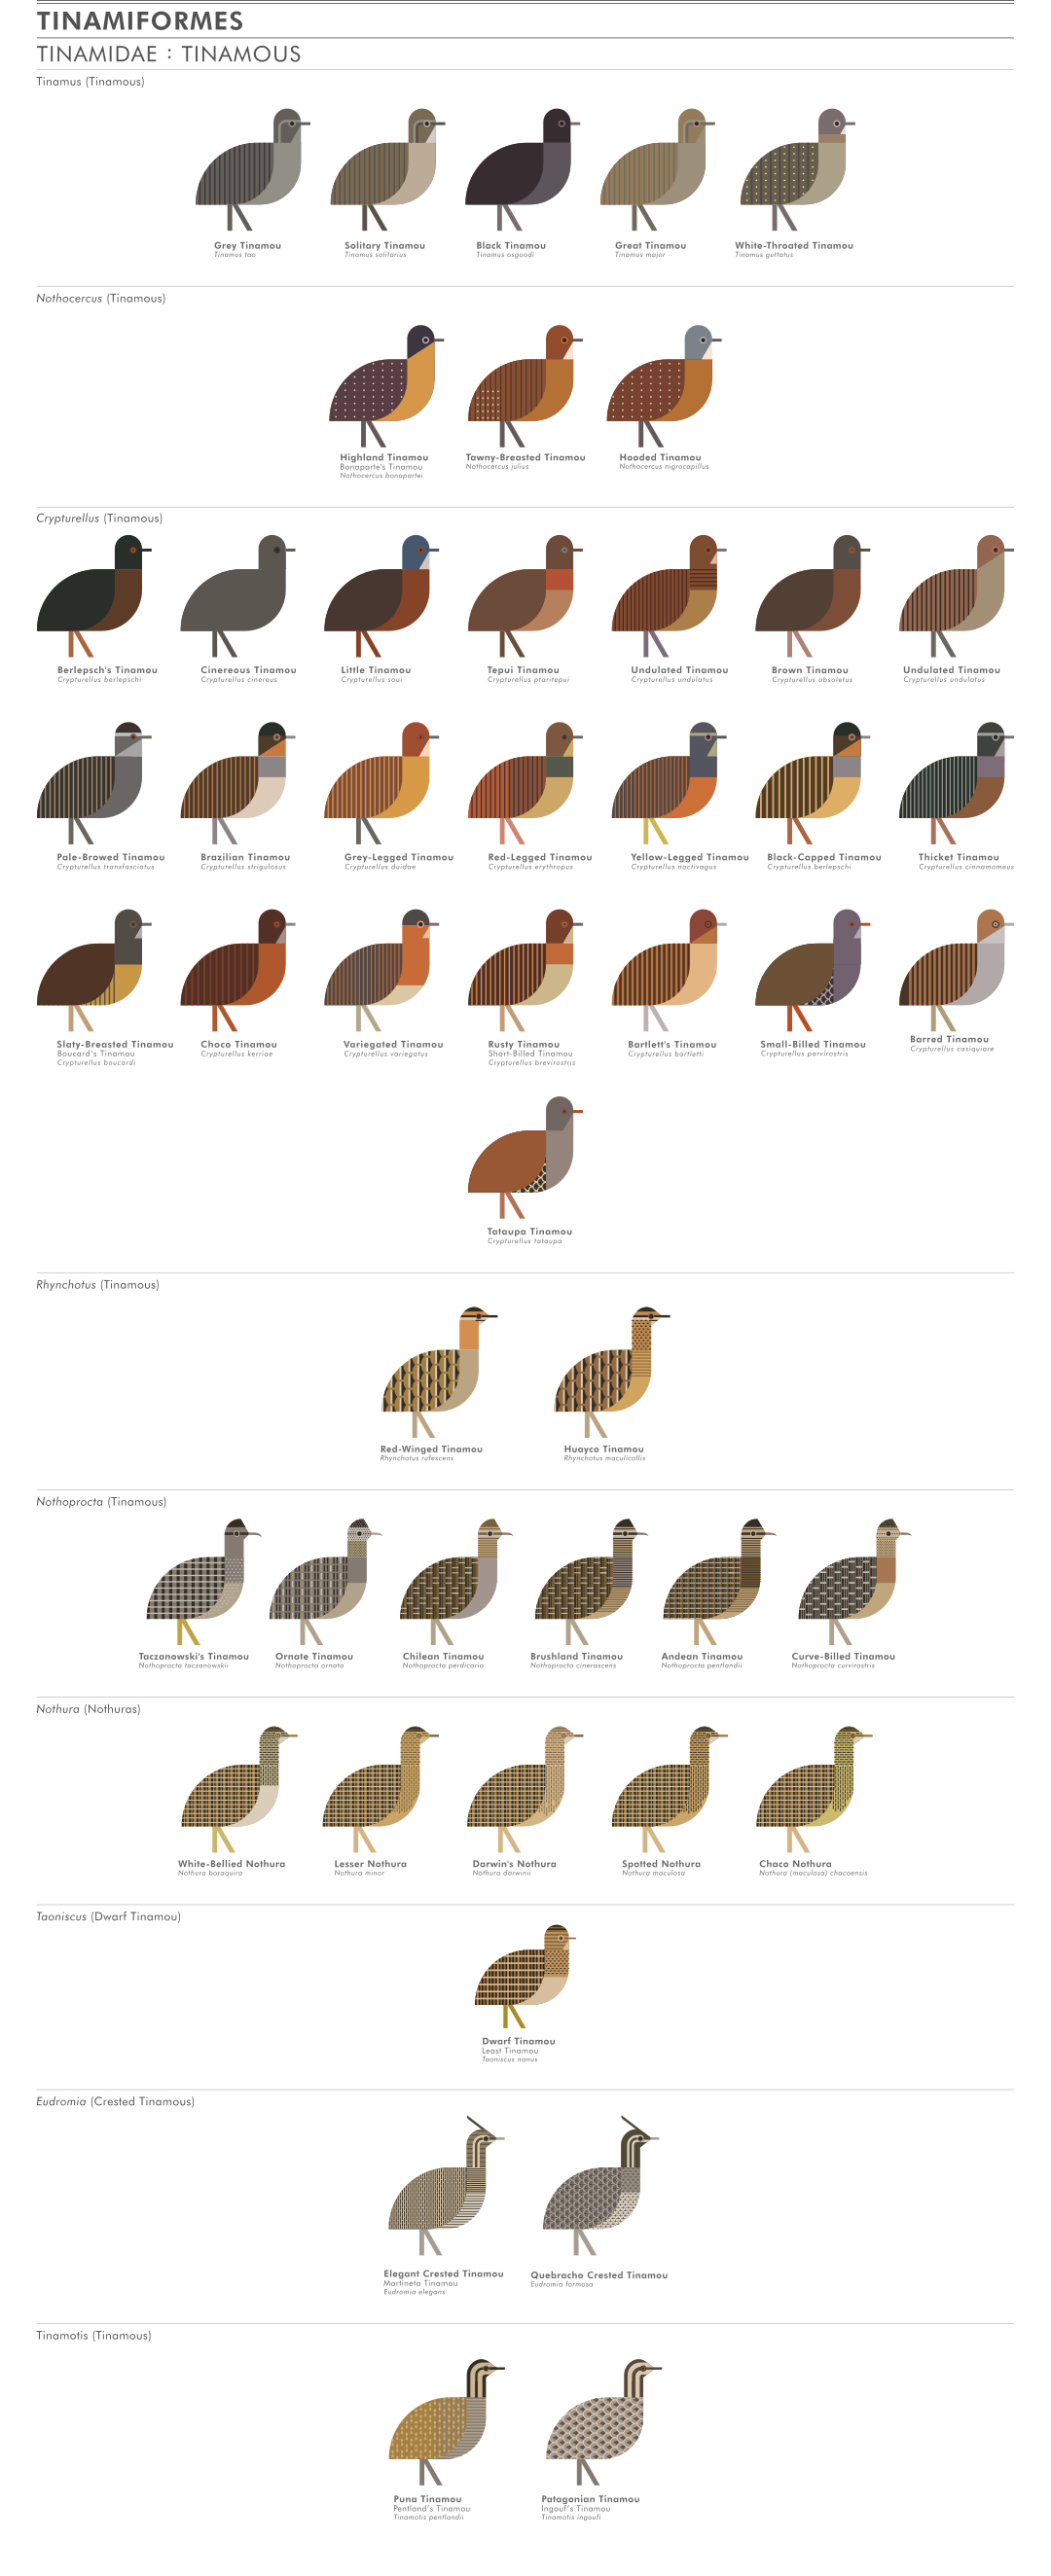 scott partridge - ave - avian vector encyclopedia - tinamous Tinamidae Tinamiformes